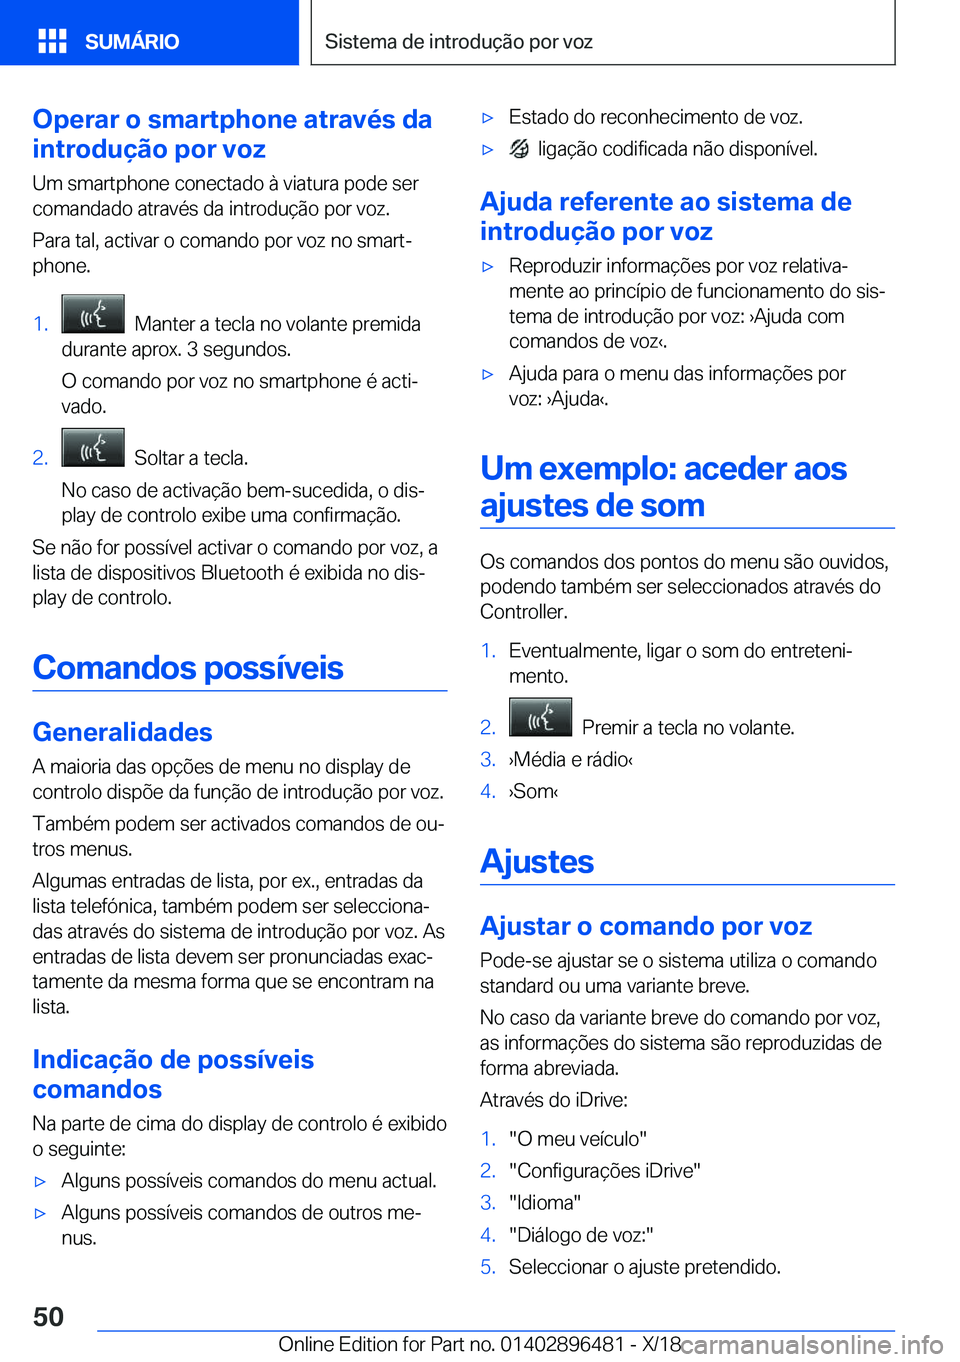 BMW X1 2019  Manual do condutor (in Portuguese) �O�p�e�r�a�r��o��s�m�a�r�t�p�h�o�n�e��a�t�r�a�v�é�s��d�a
�i�n�t�r�o�d�u�